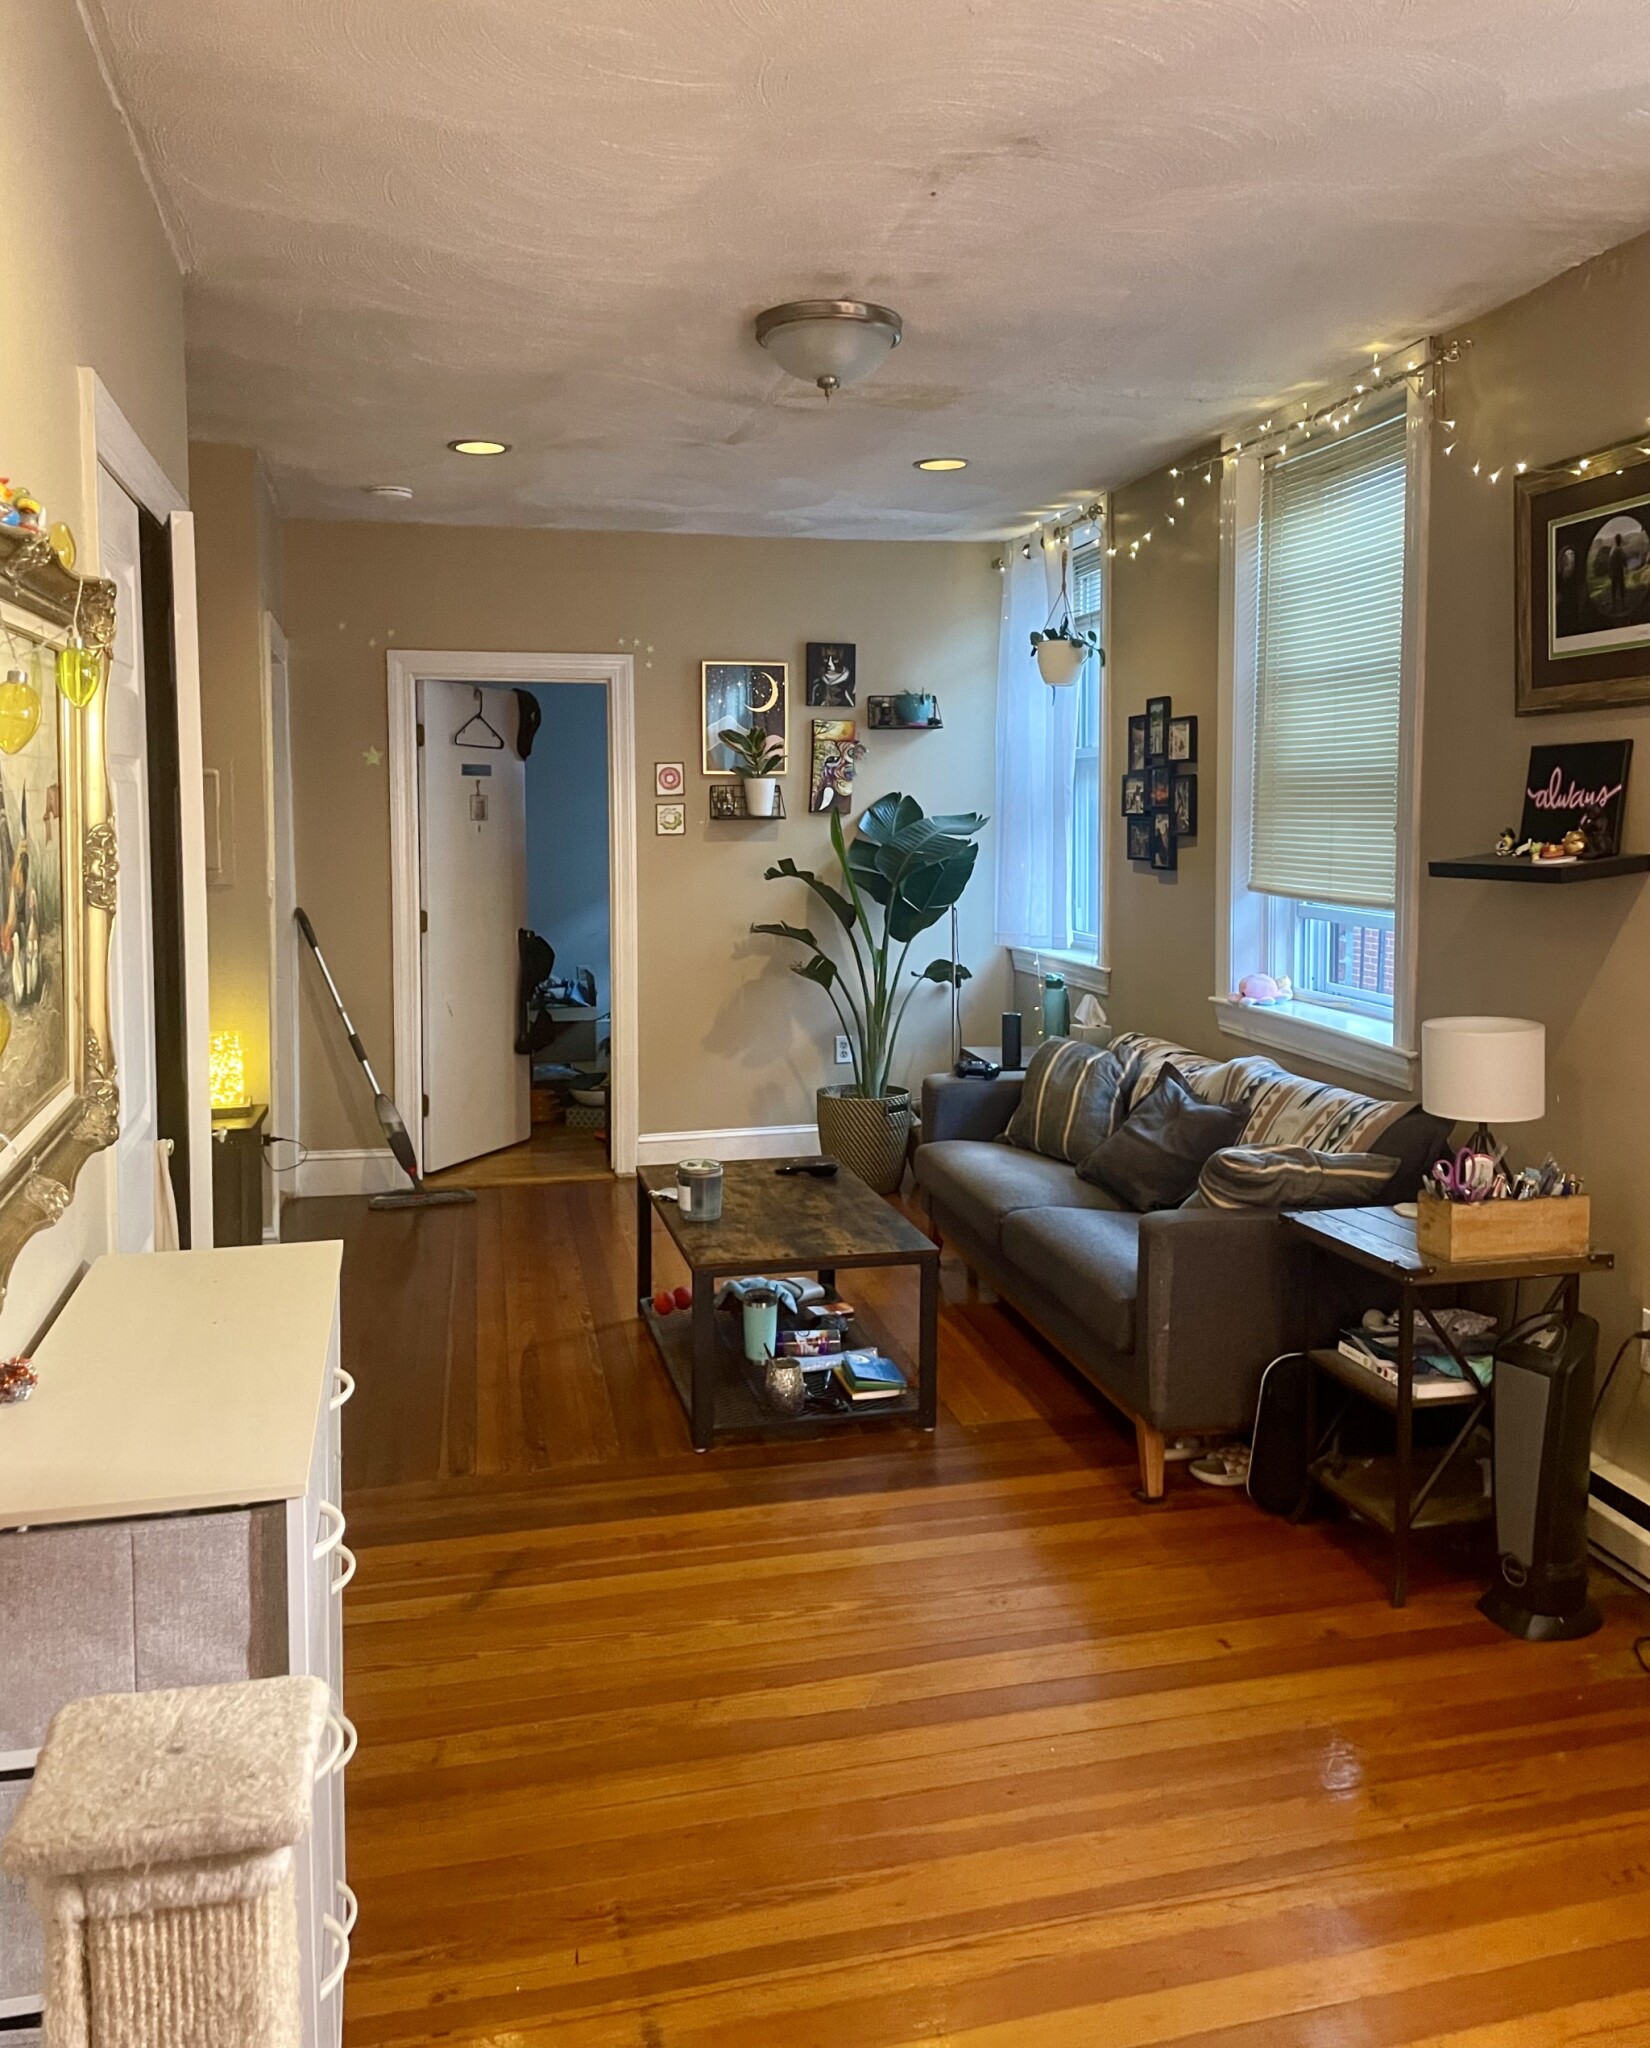 Photos of apartment on Devonshire Pl.,Boston MA 02109